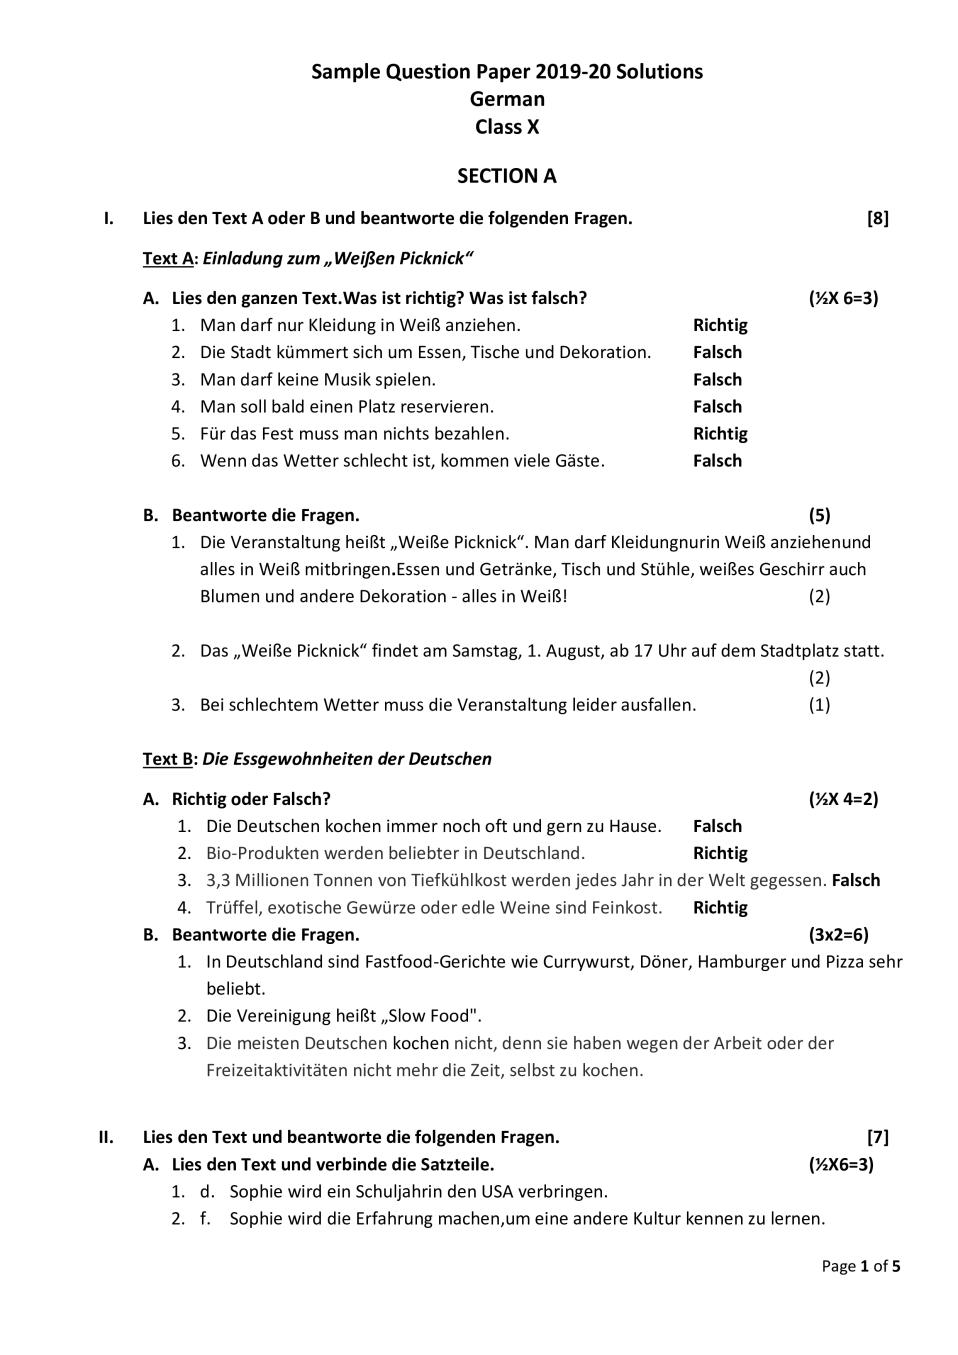 CBSE Class 10 Marking Scheme 2020 for German - Page 1